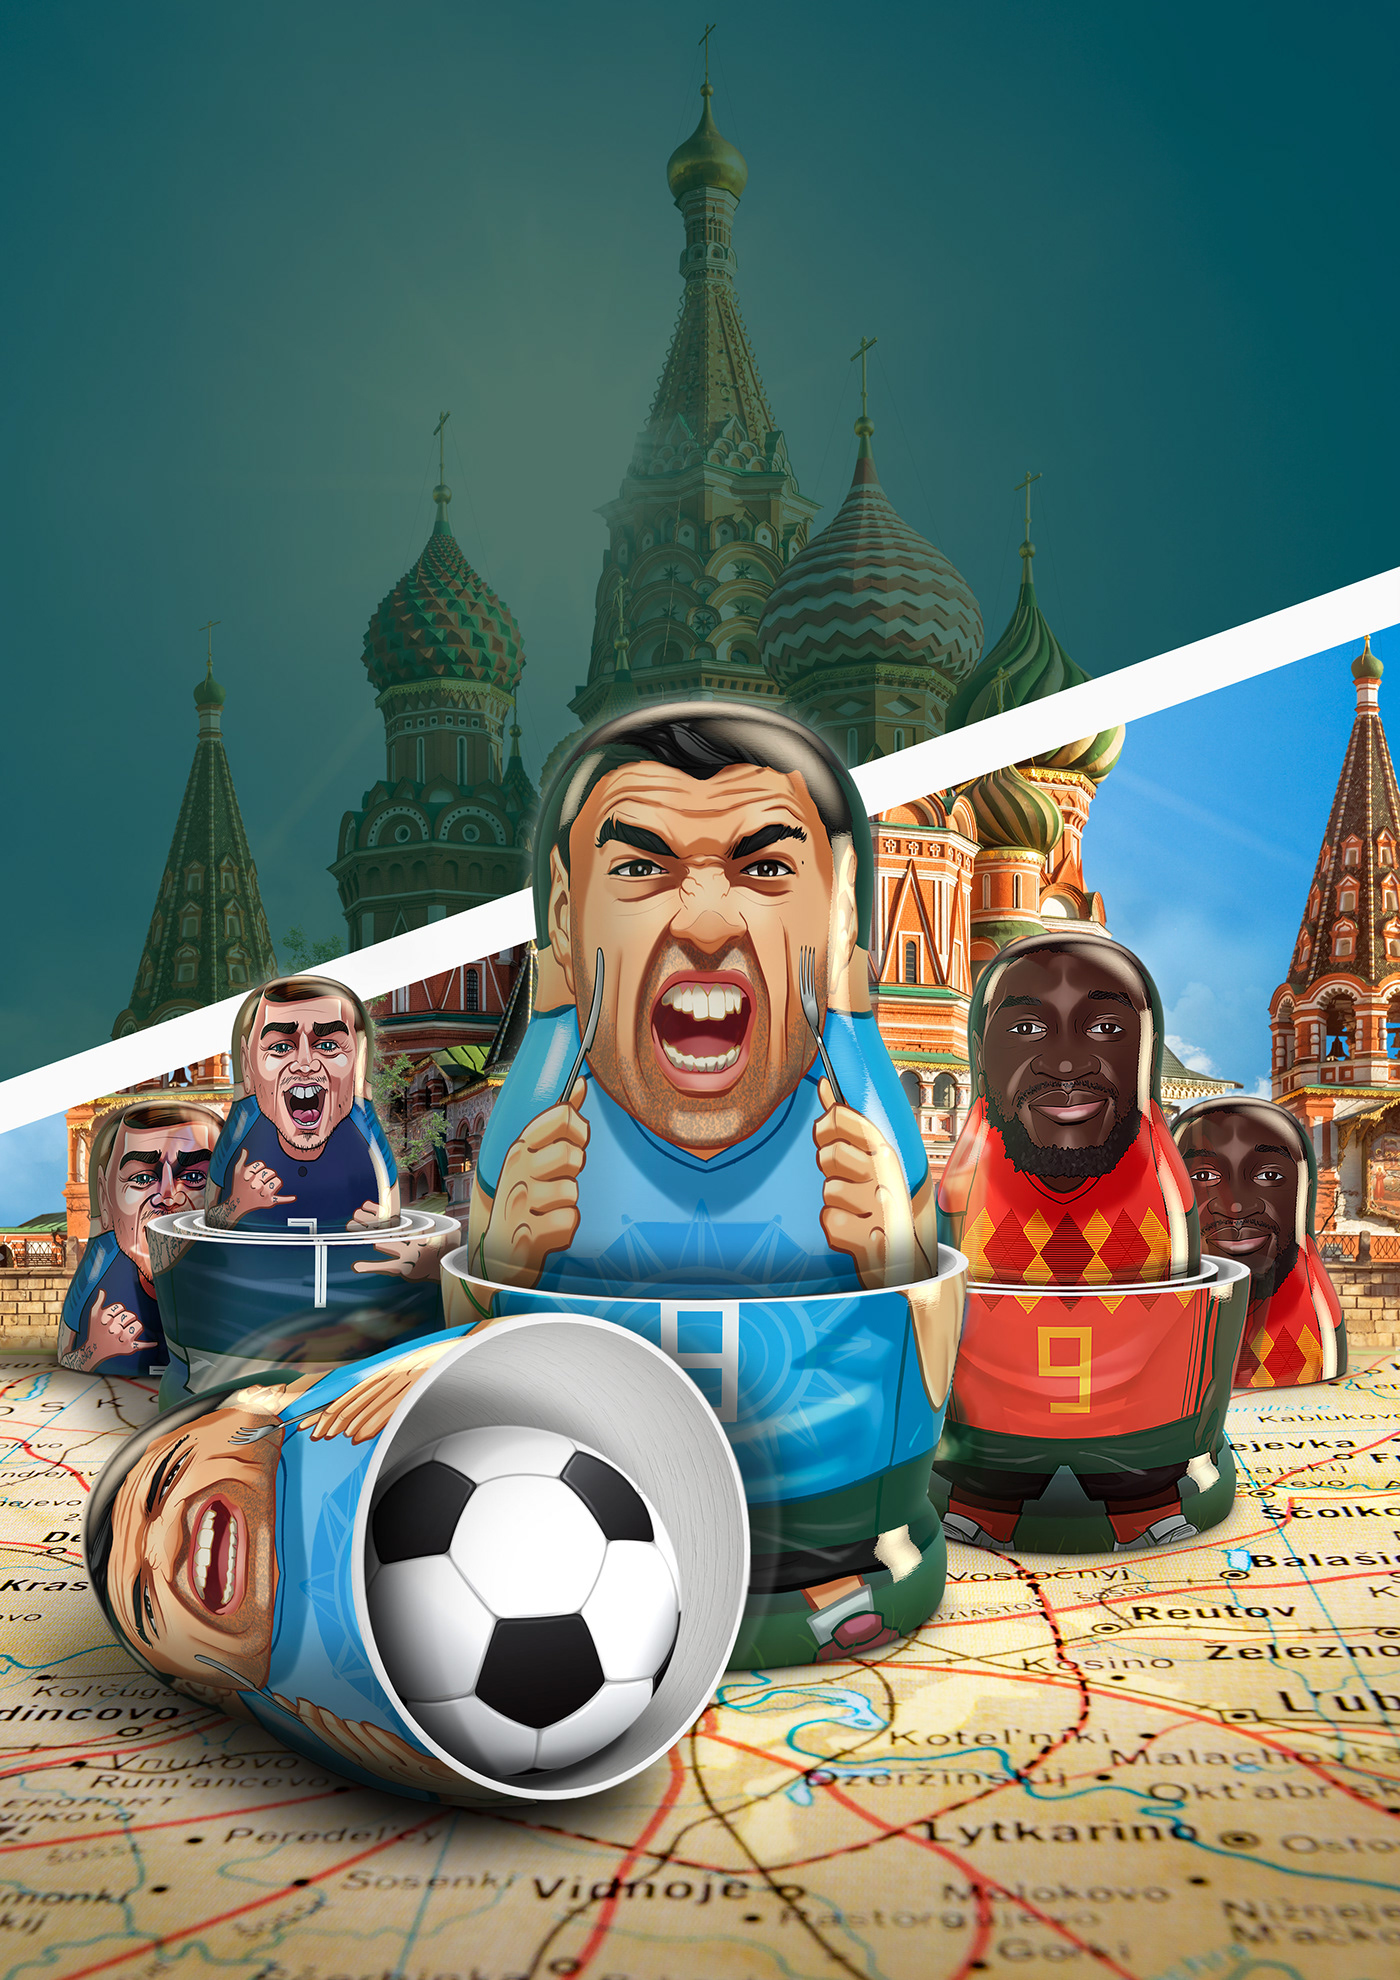 World Cup 2018 world cup paddy power Russian Dolls dolls babushka doll football